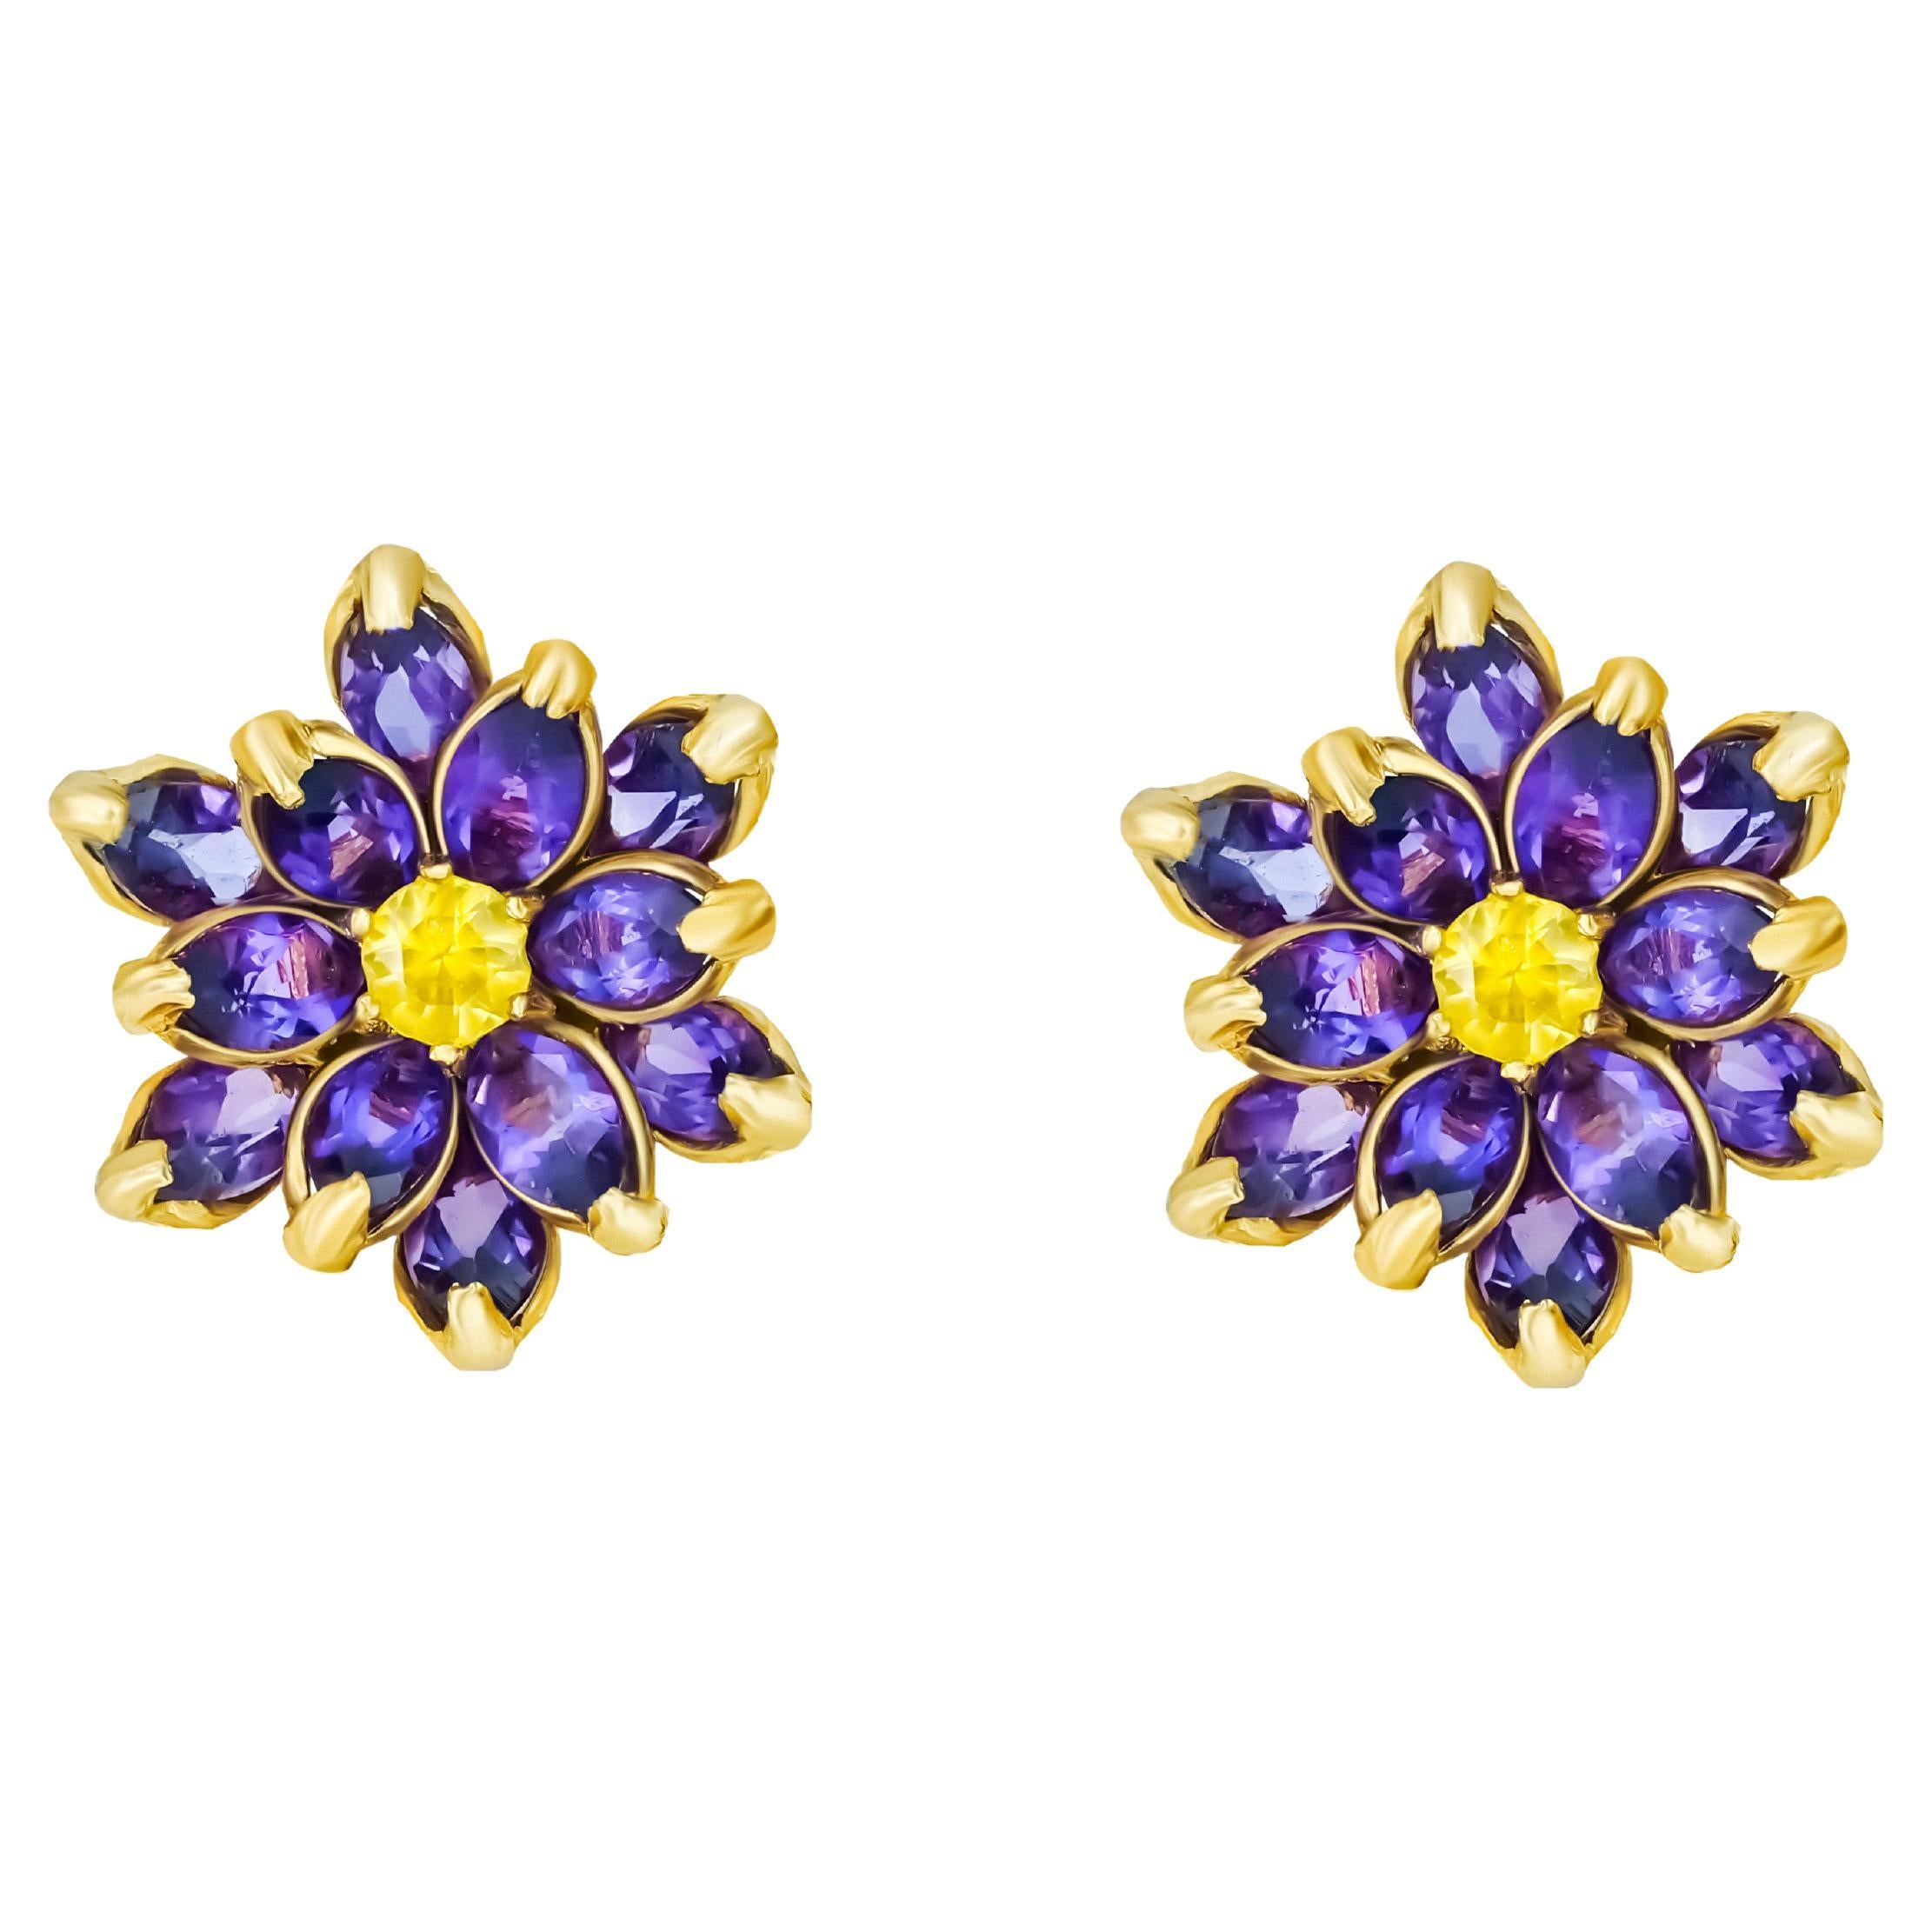 Lotus Flower Earrings Studs in 14k Gold, Amethyst and Sapphires Earrings For Sale